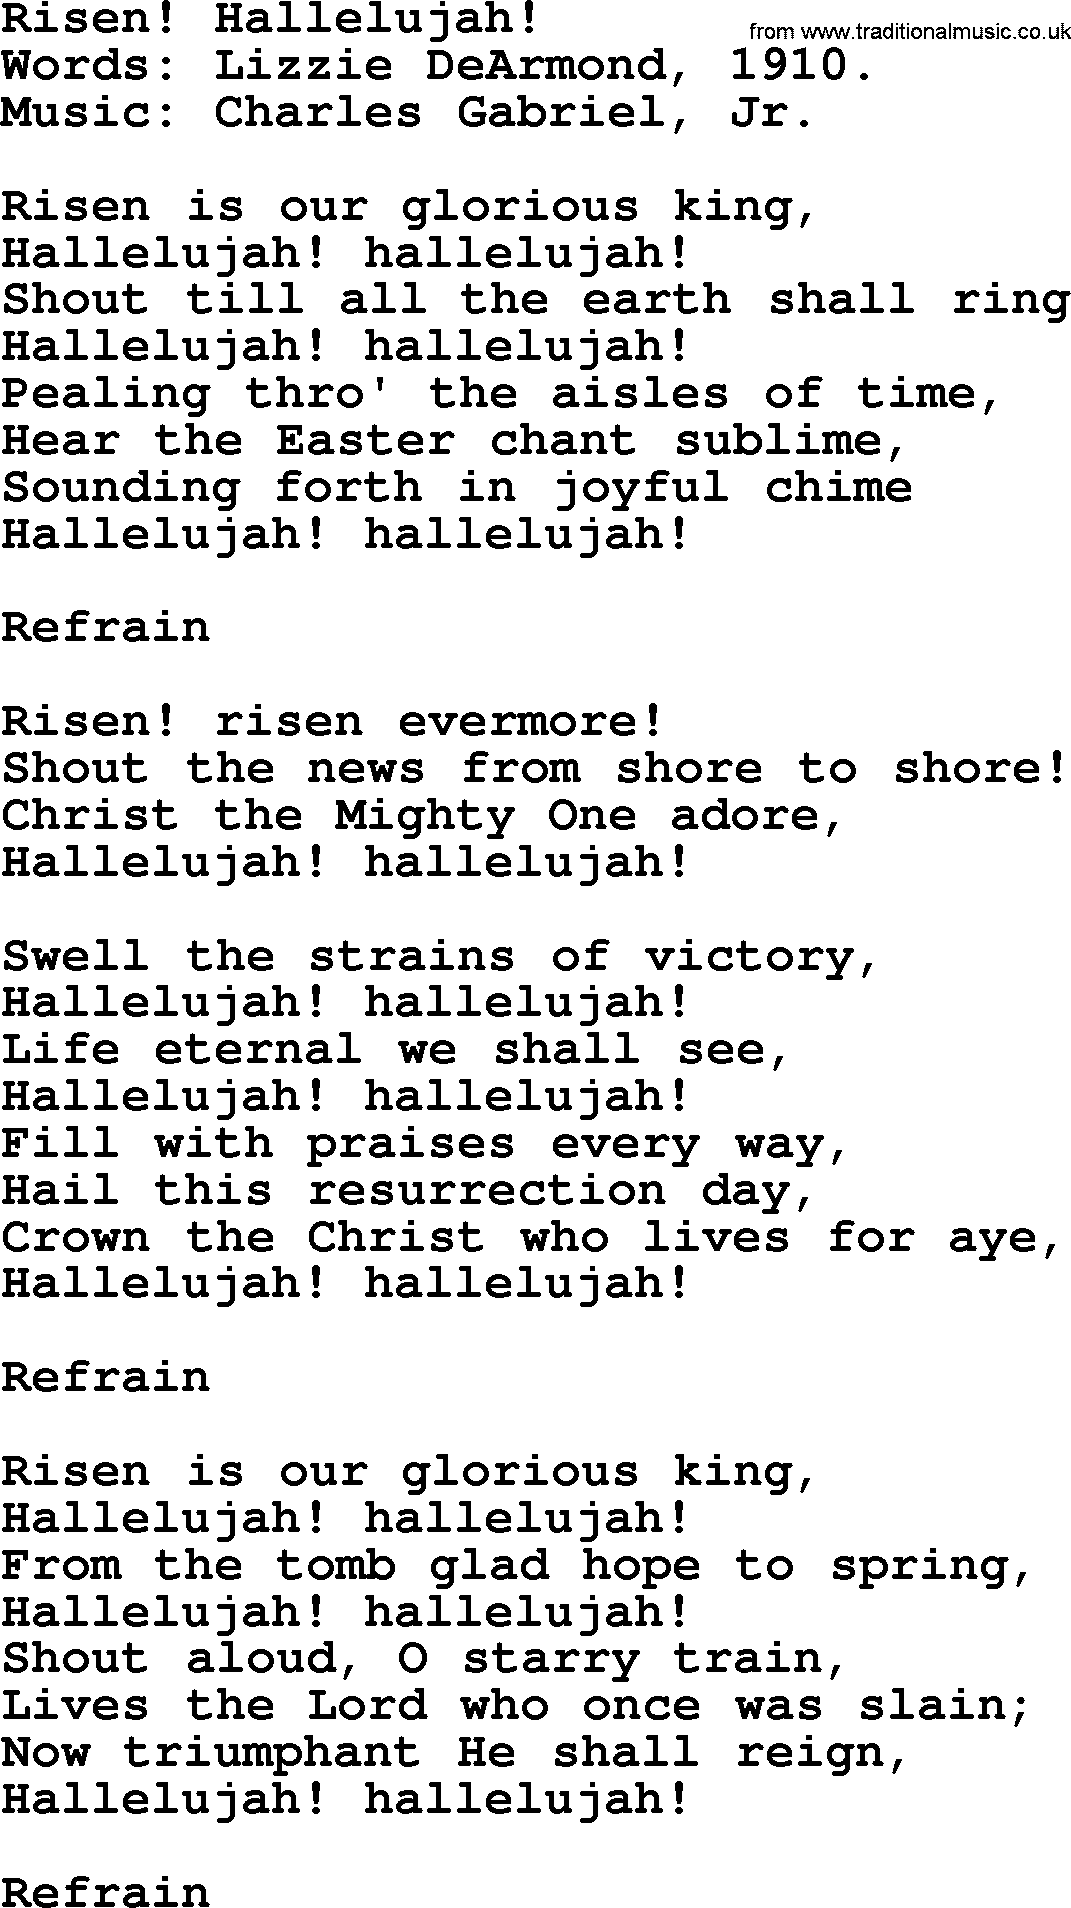 Easter Hymns, Hymn: Risen! Hallelujah!, lyrics with PDF